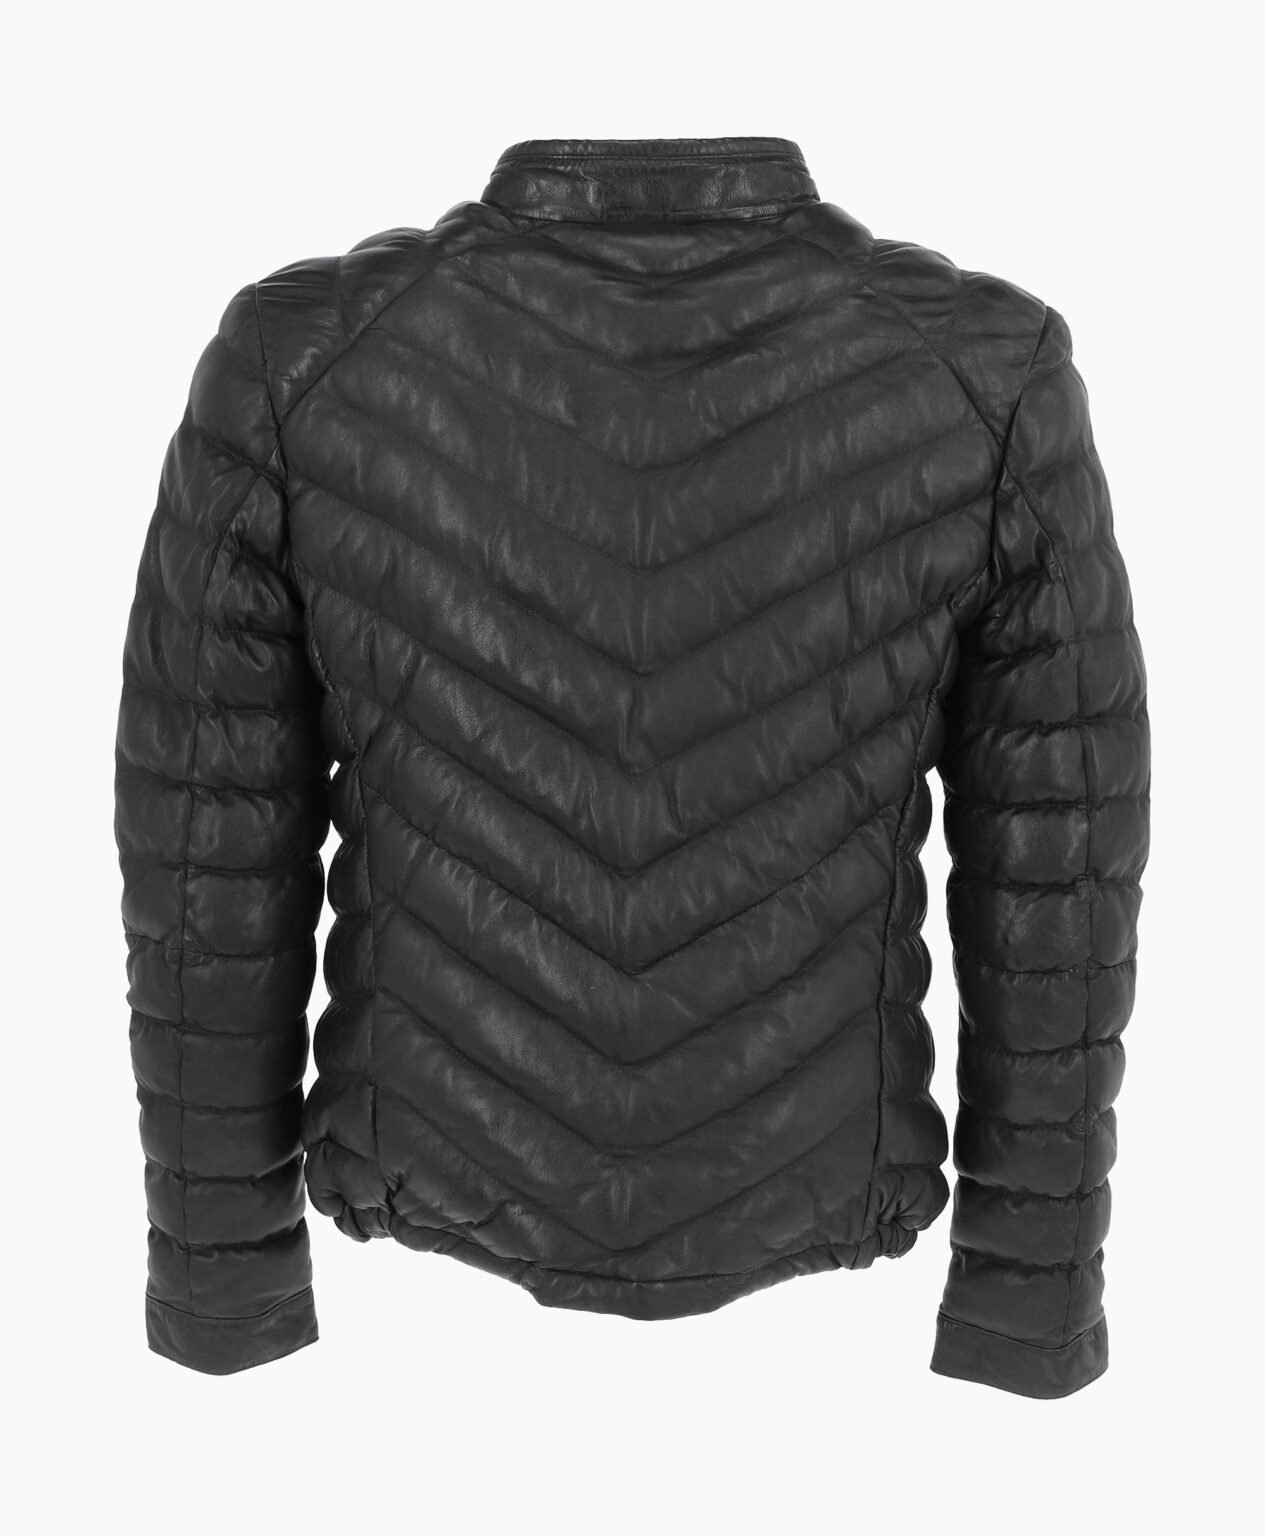 vogue-jacket-leather-puffer-jacket-black-prescott-image202